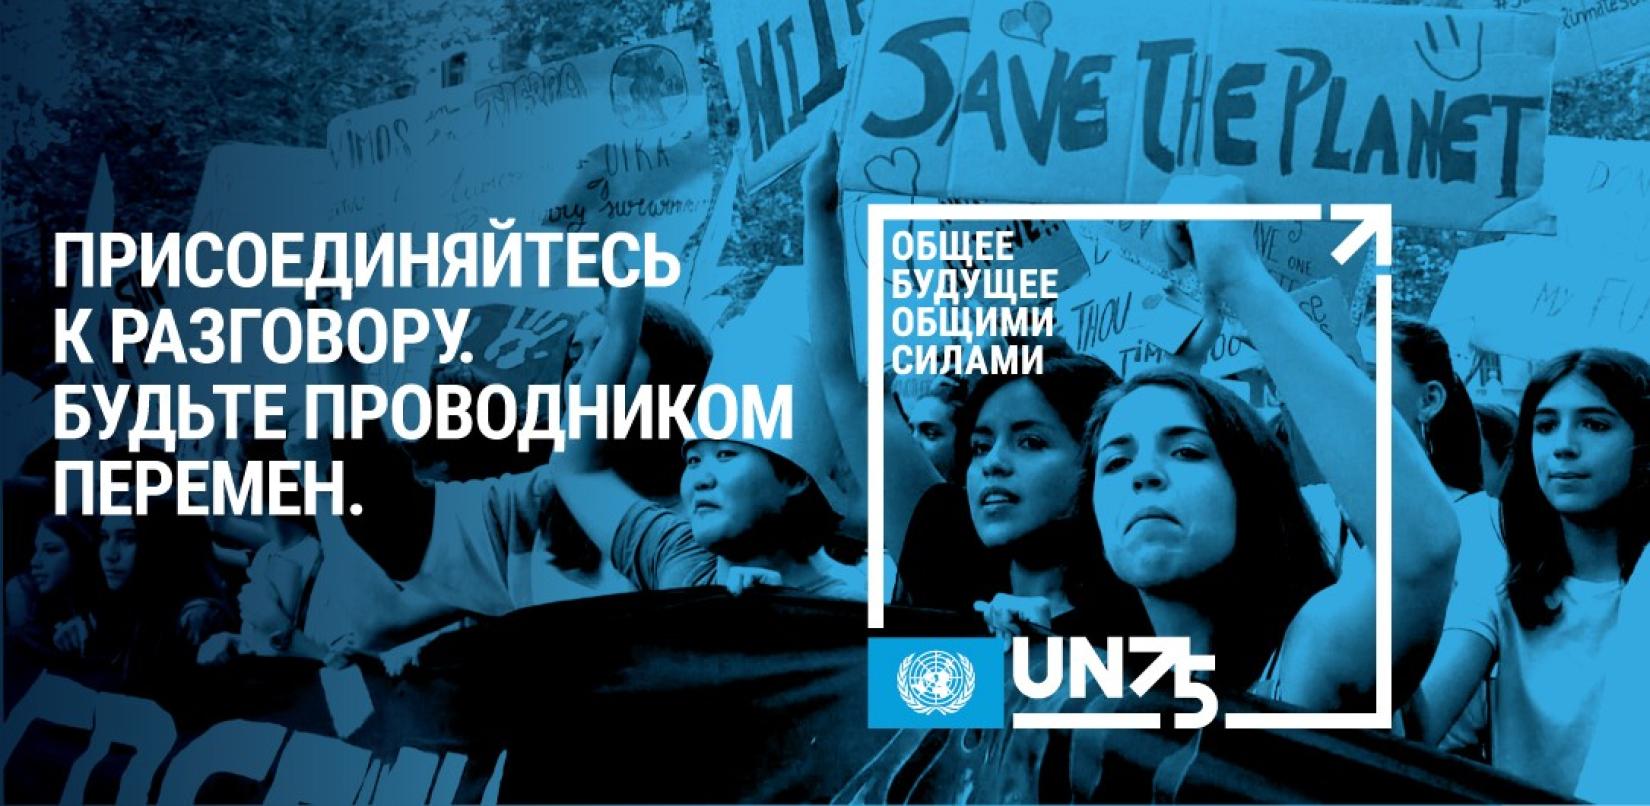 UNDP Belarus kicks off the UN75 Youth Dialogues 